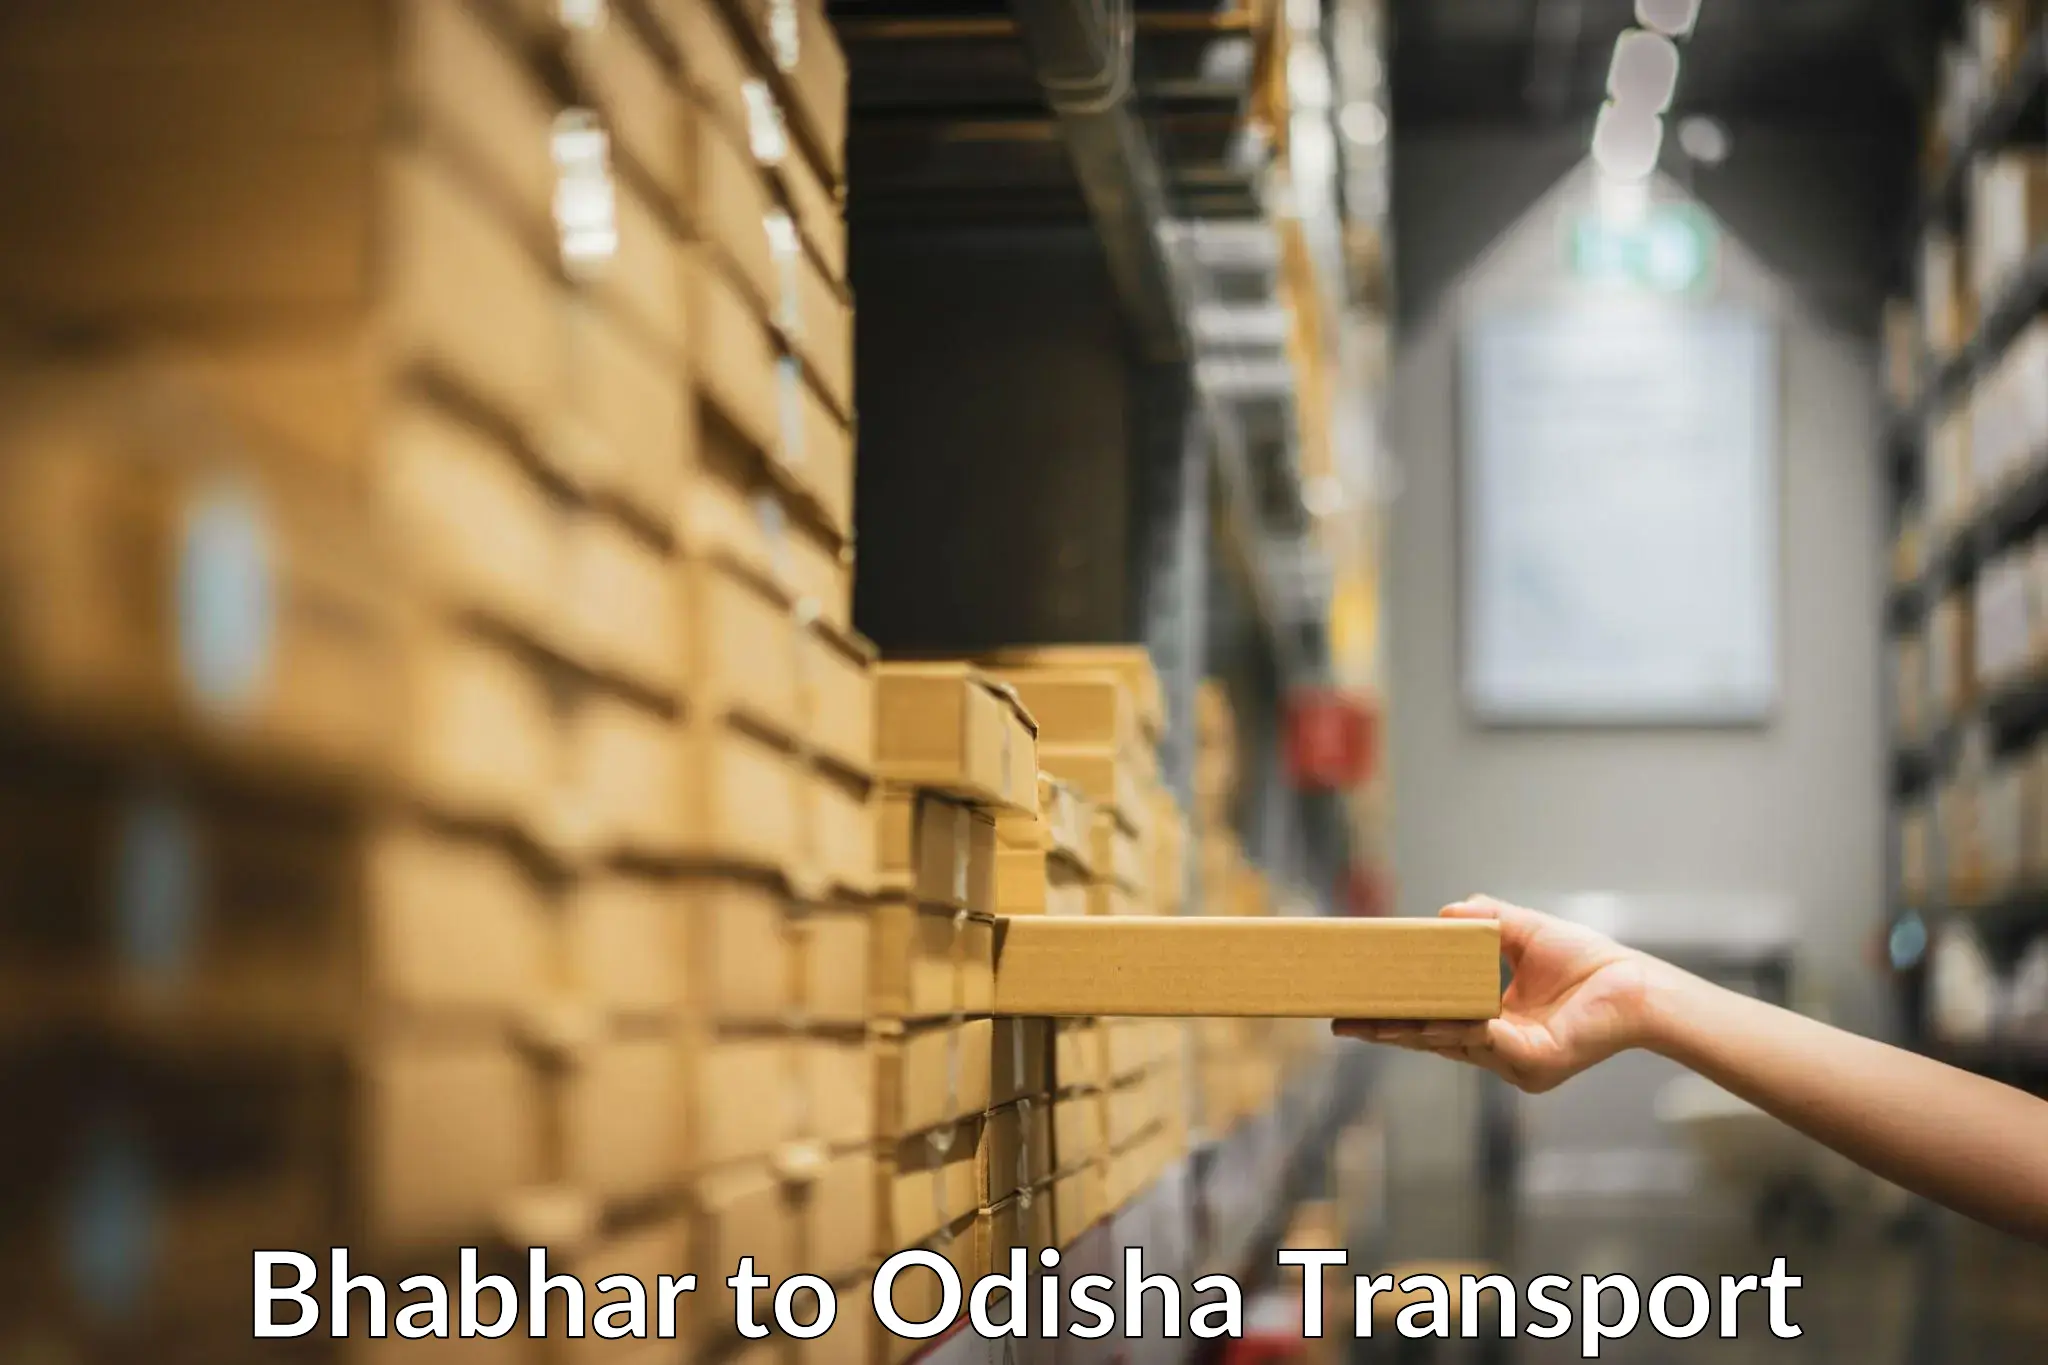 Truck transport companies in India Bhabhar to Riamal